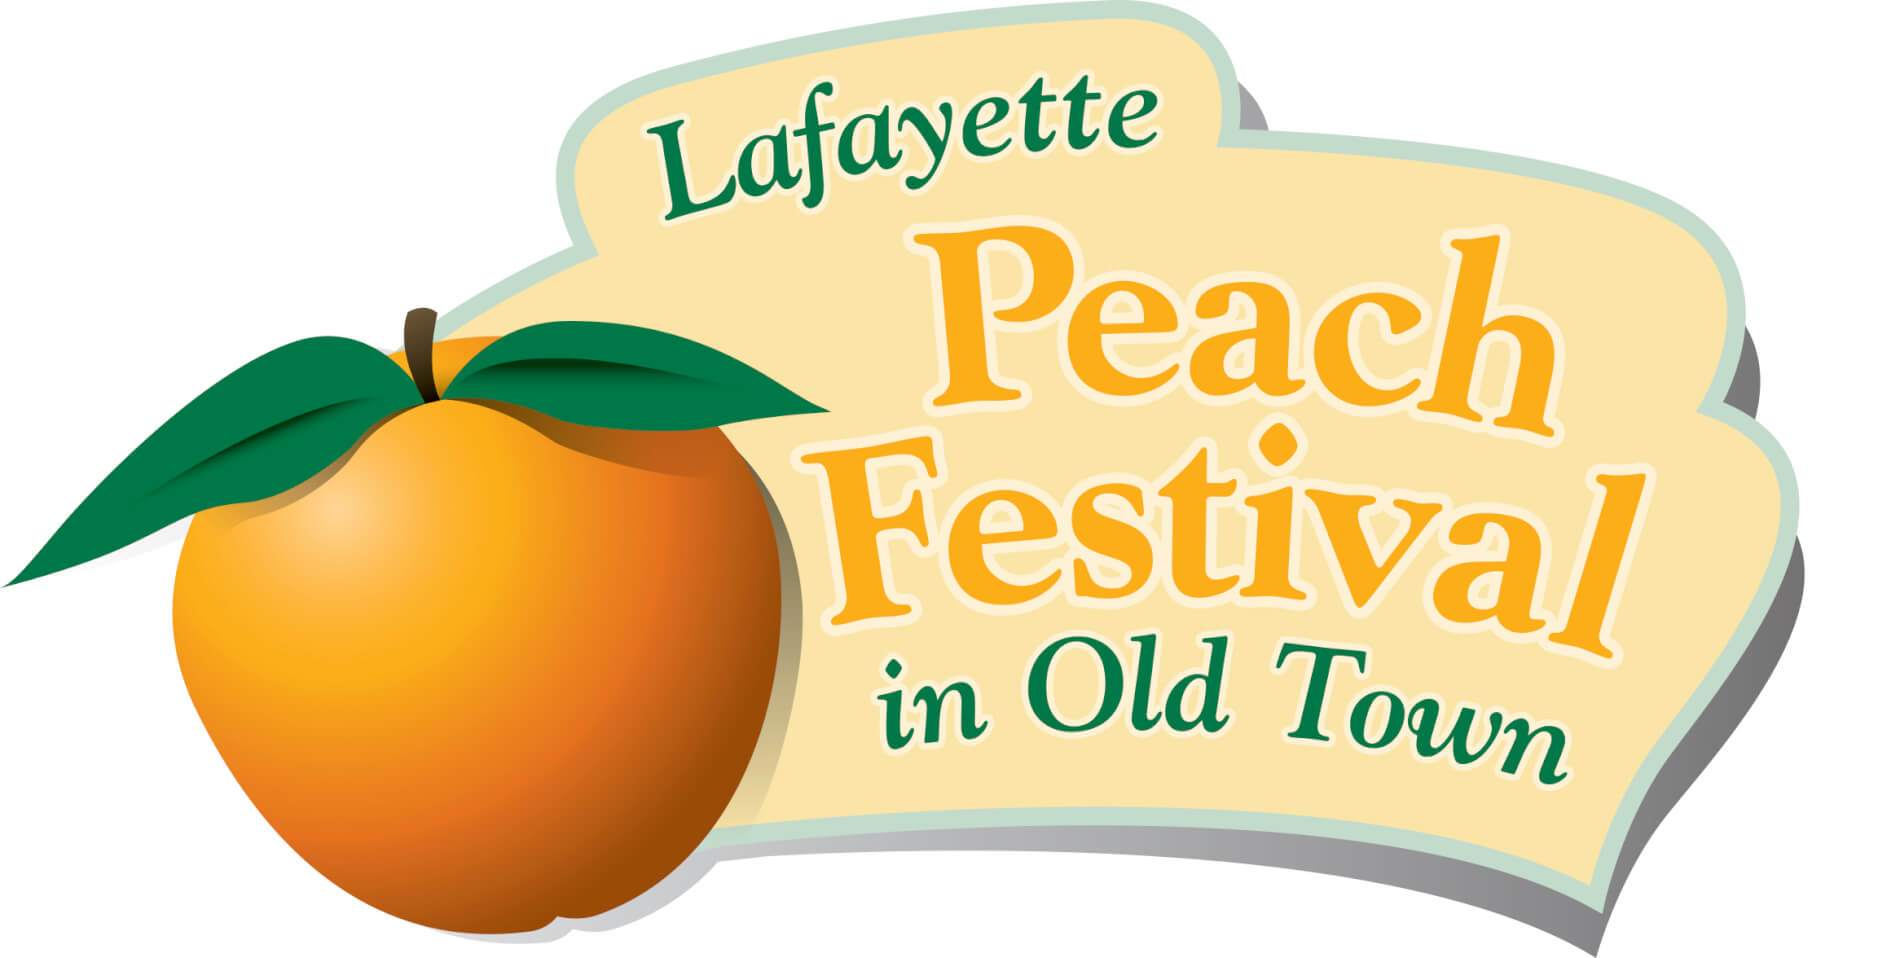 Lafayette Peach Festival Visit Old Town Lafayette, Colorado